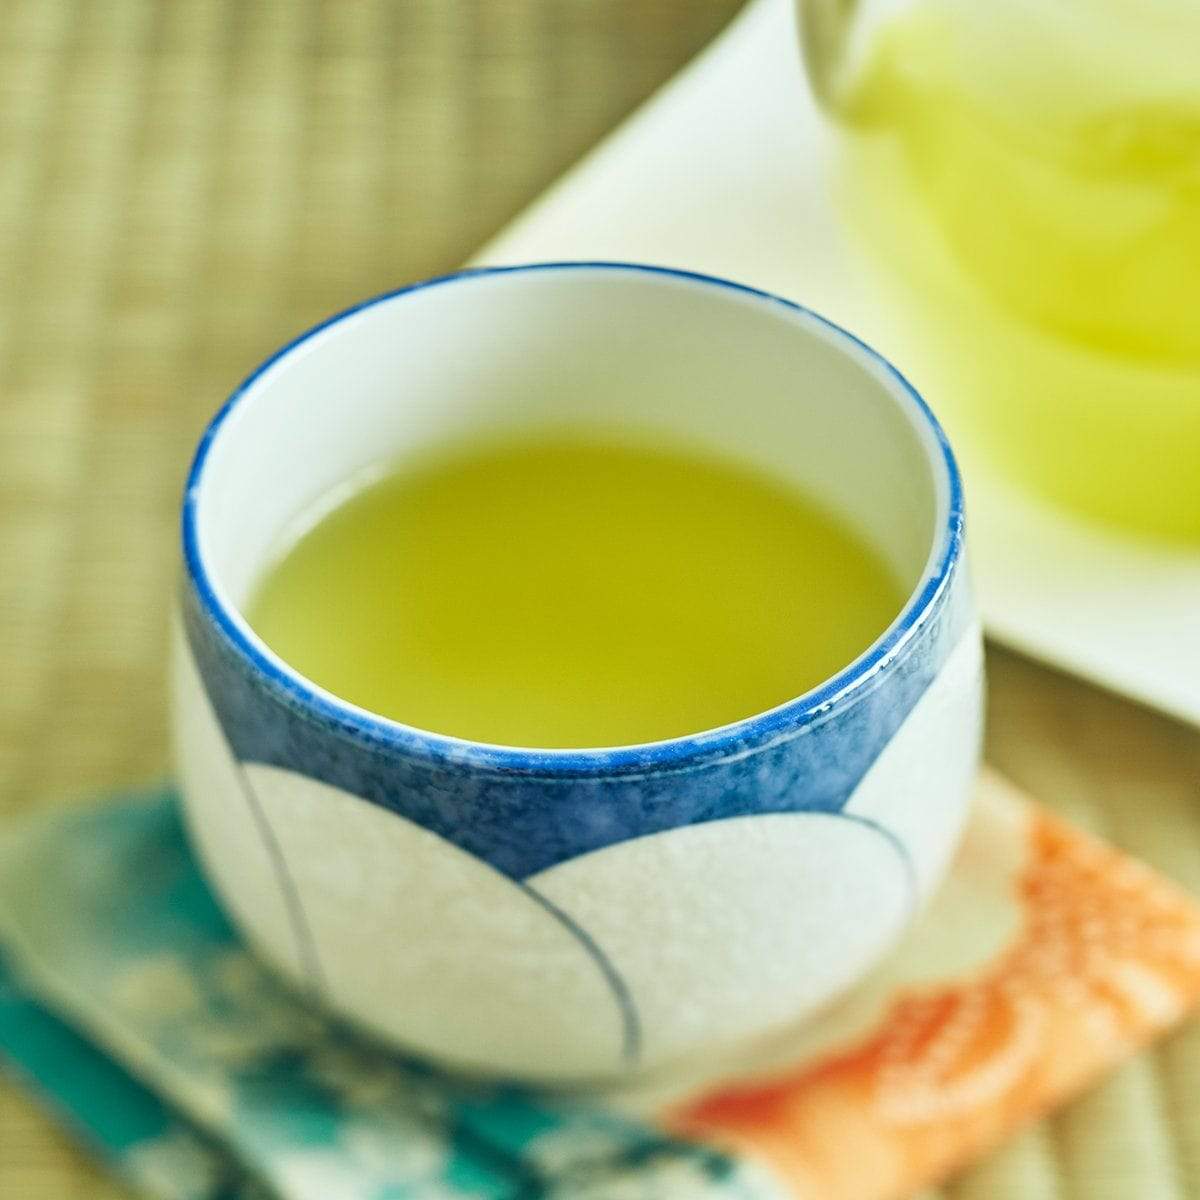 Ocha & Co. Organic Japanese Sencha Green Tea